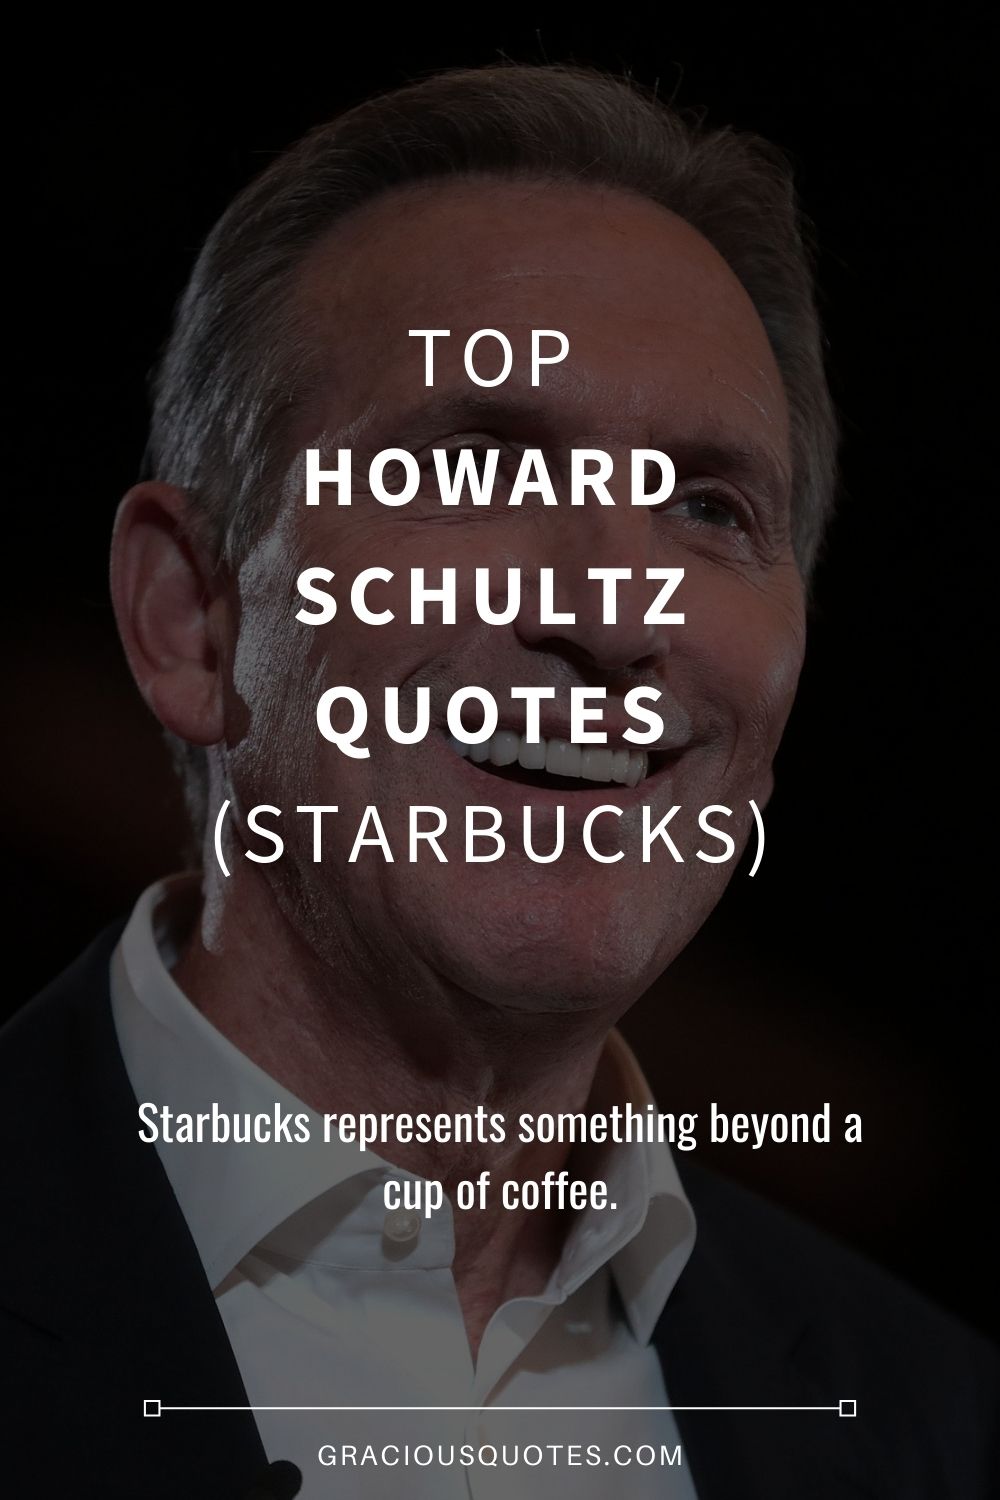 Top Howard Schultz Quotes (STARBUCKS) - Gracious Quotes